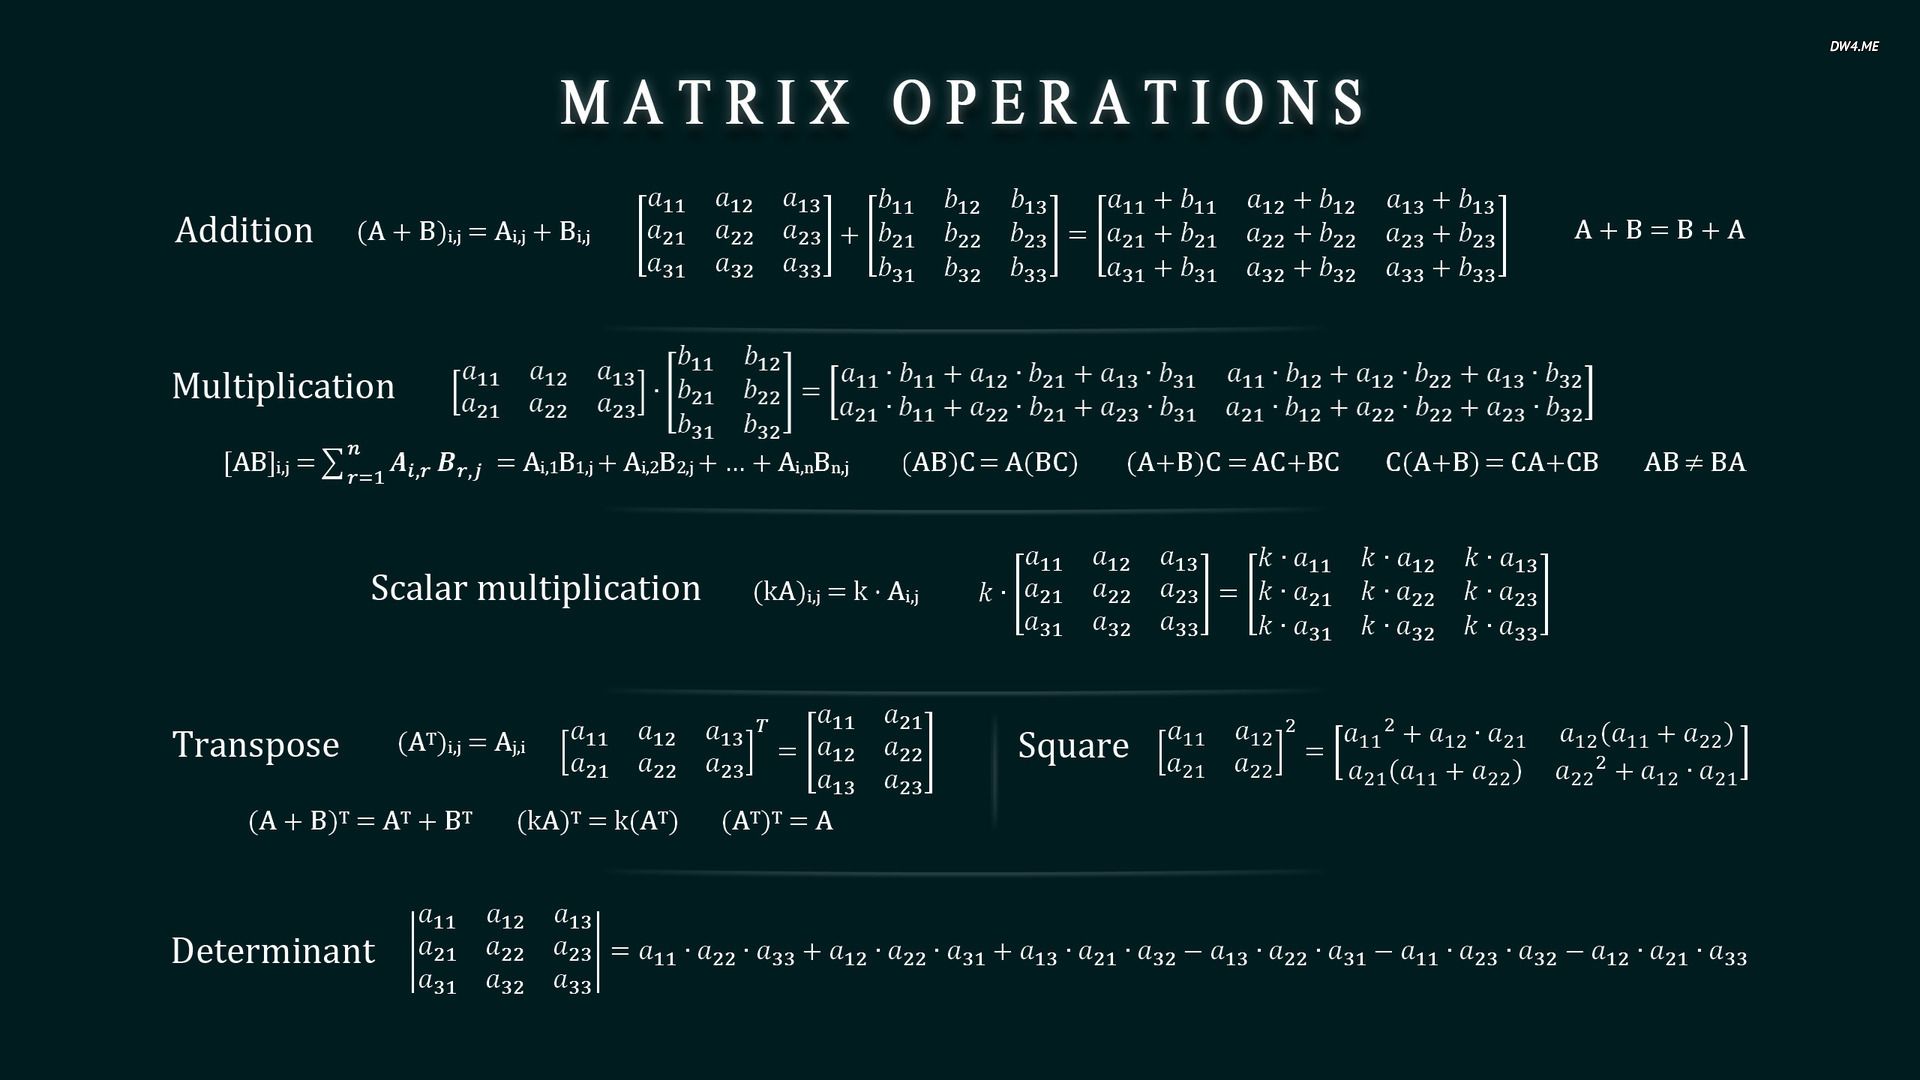 Matrix operations cheat sheet wallpaper - Digital Art wallpapers ...